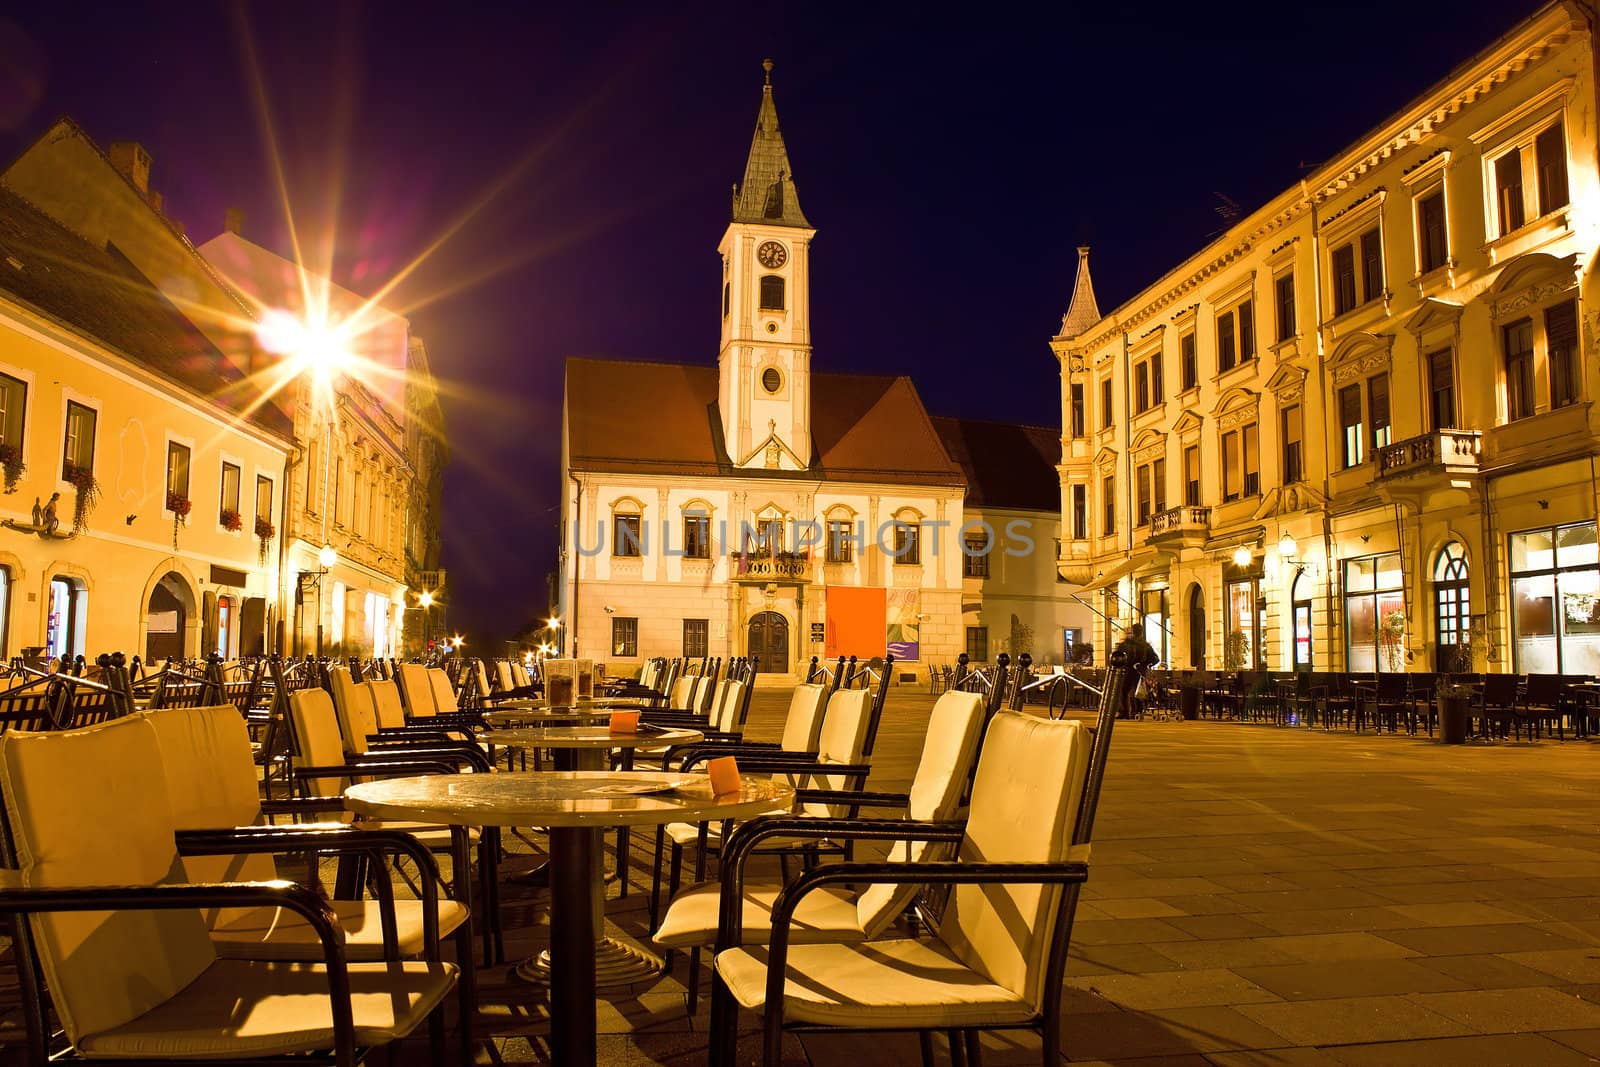 Baroque town of Varazdin city center by xbrchx